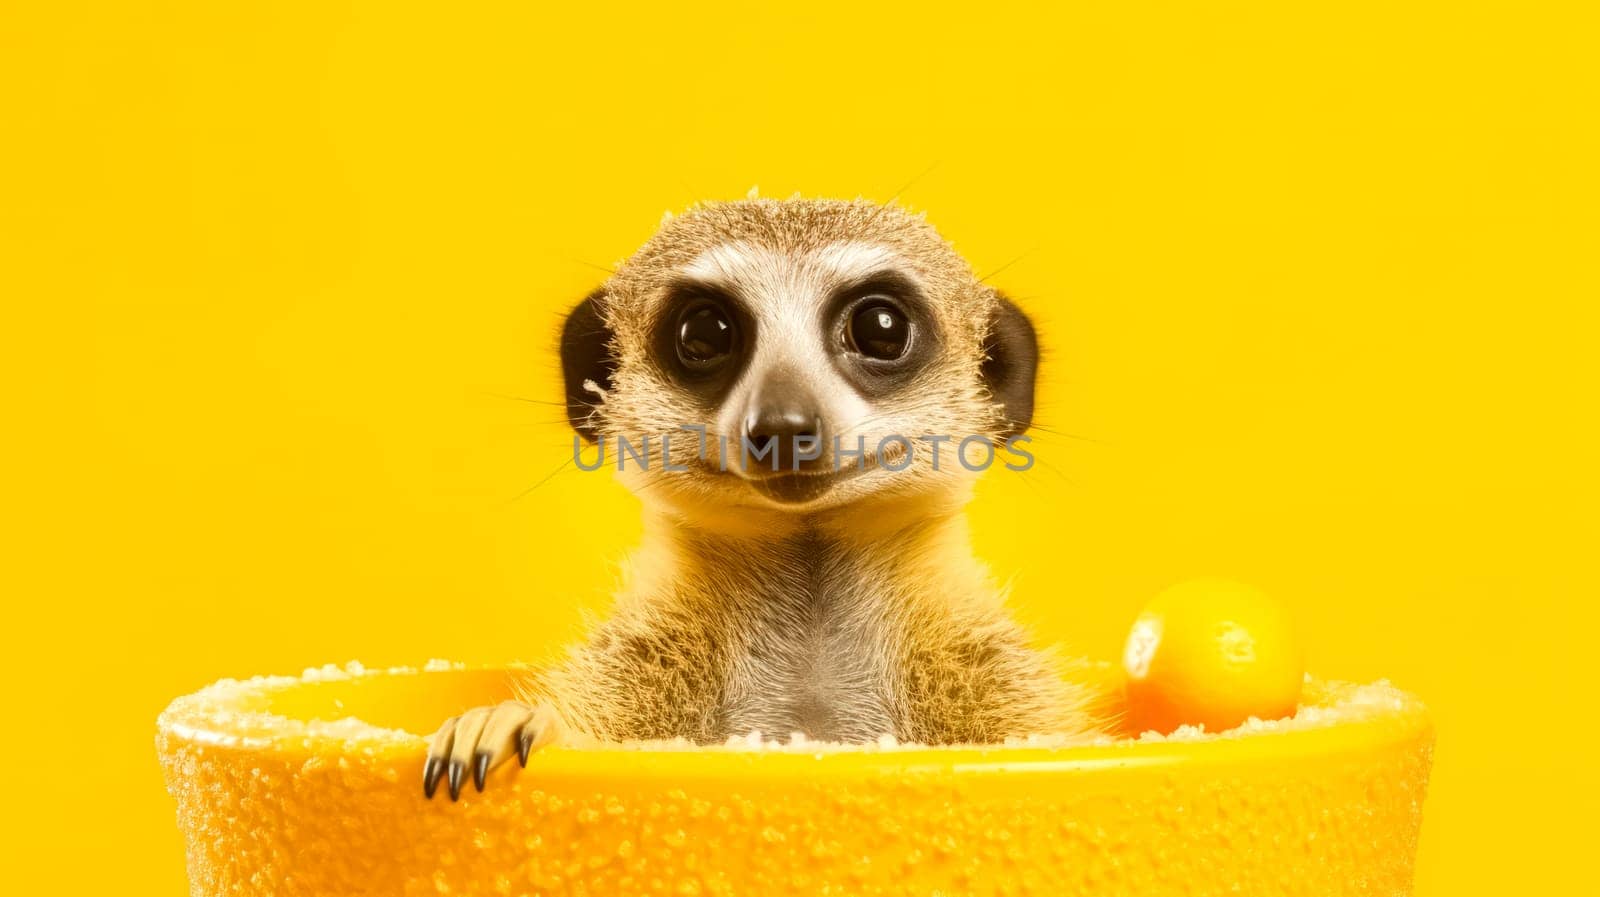 A charming meerkat enjoys a bubbly bath in a bathtub against a vibrant yellow background by Alla_Morozova93